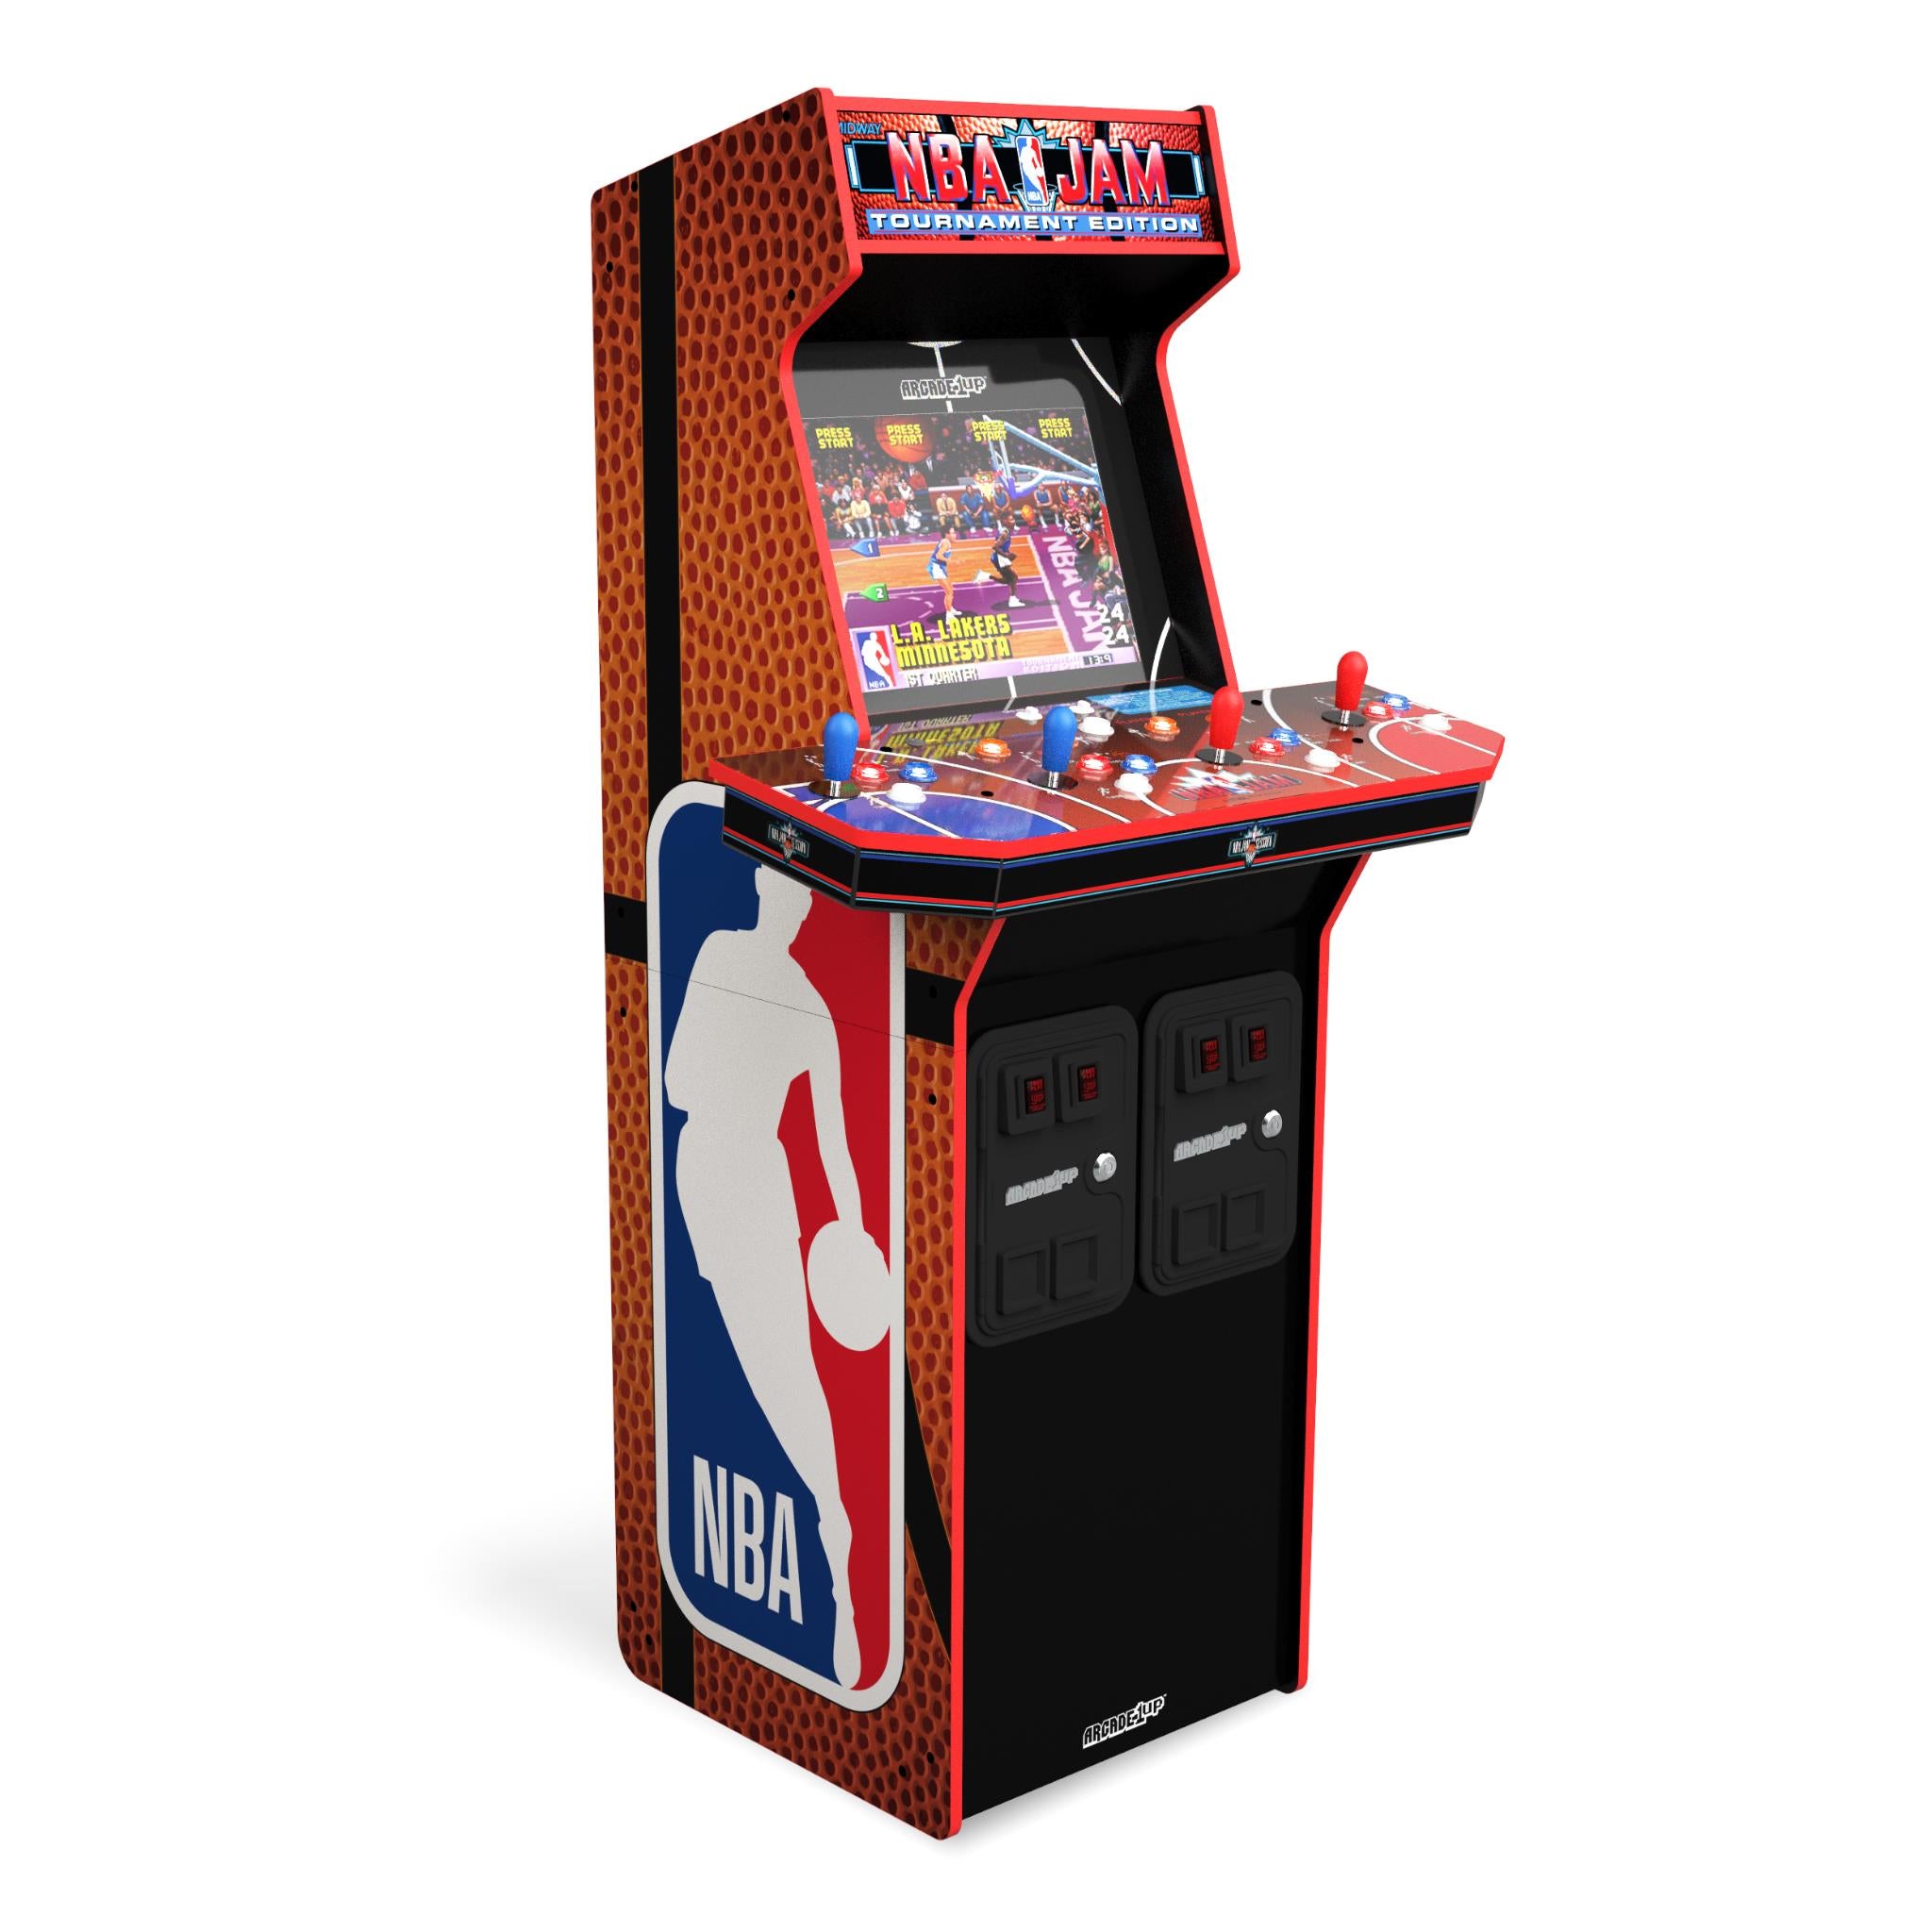 arcade1up nba jam 30th anniversary deluxe arcade machine 3 games in 1